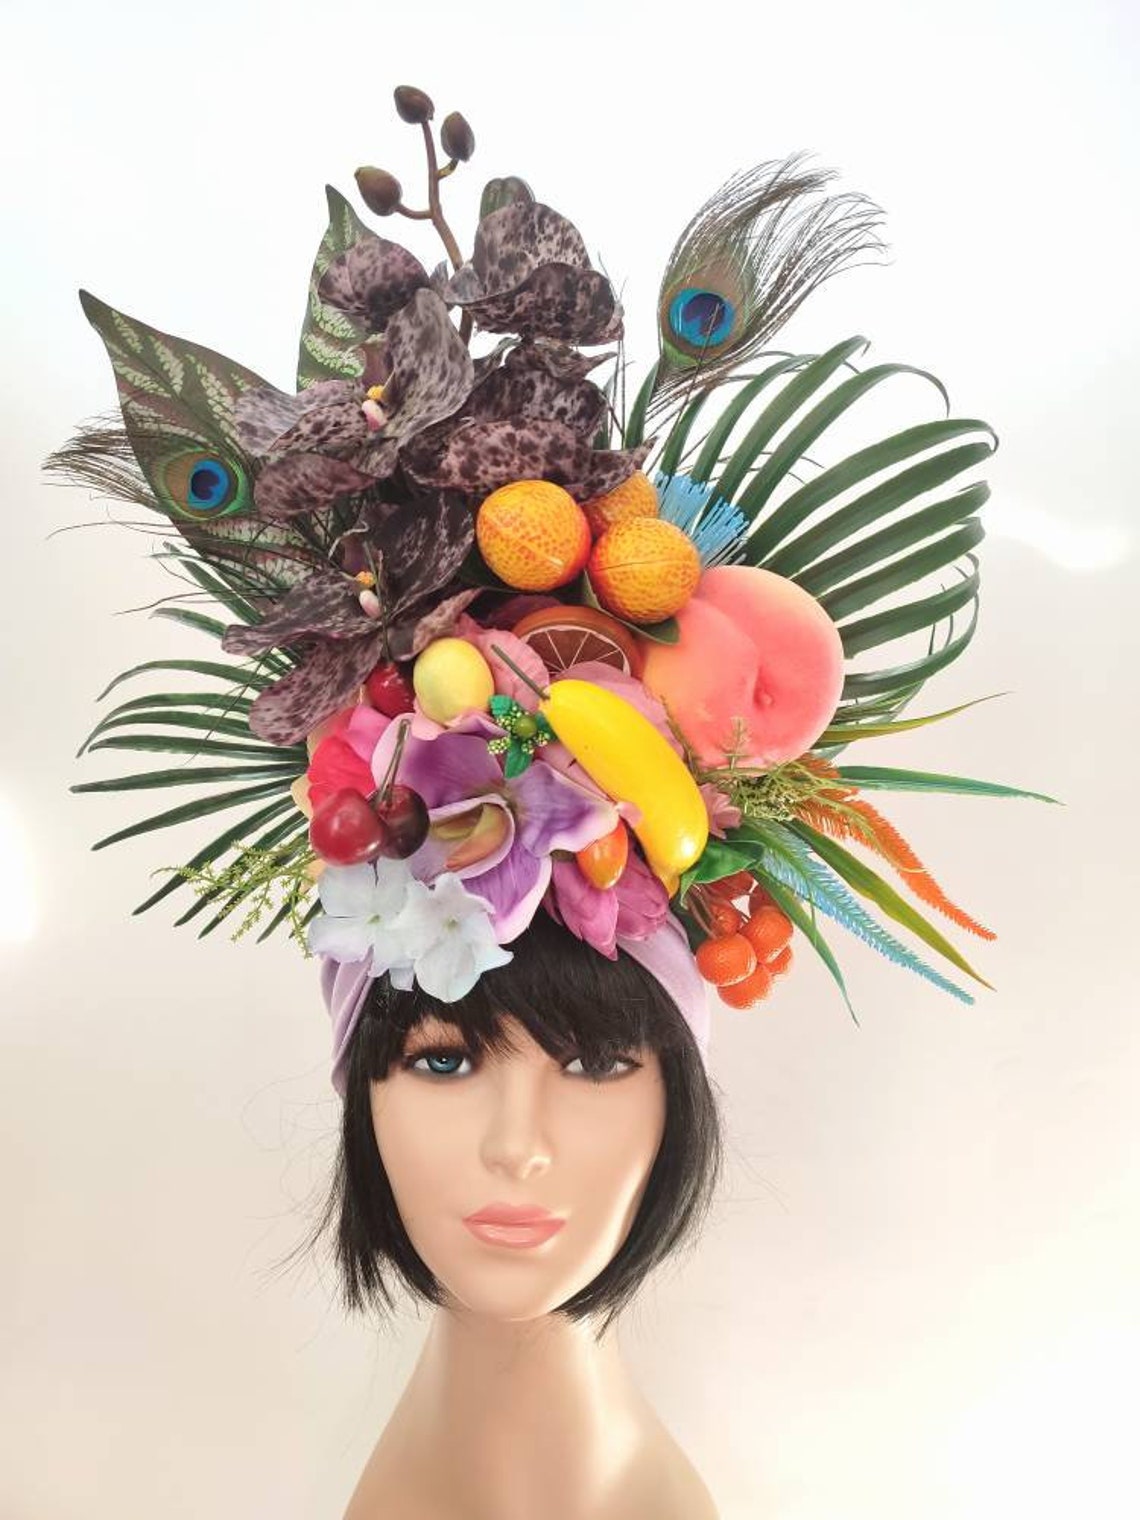 Large fruit headdress Carmen miranda hat 30th birthday | Etsy